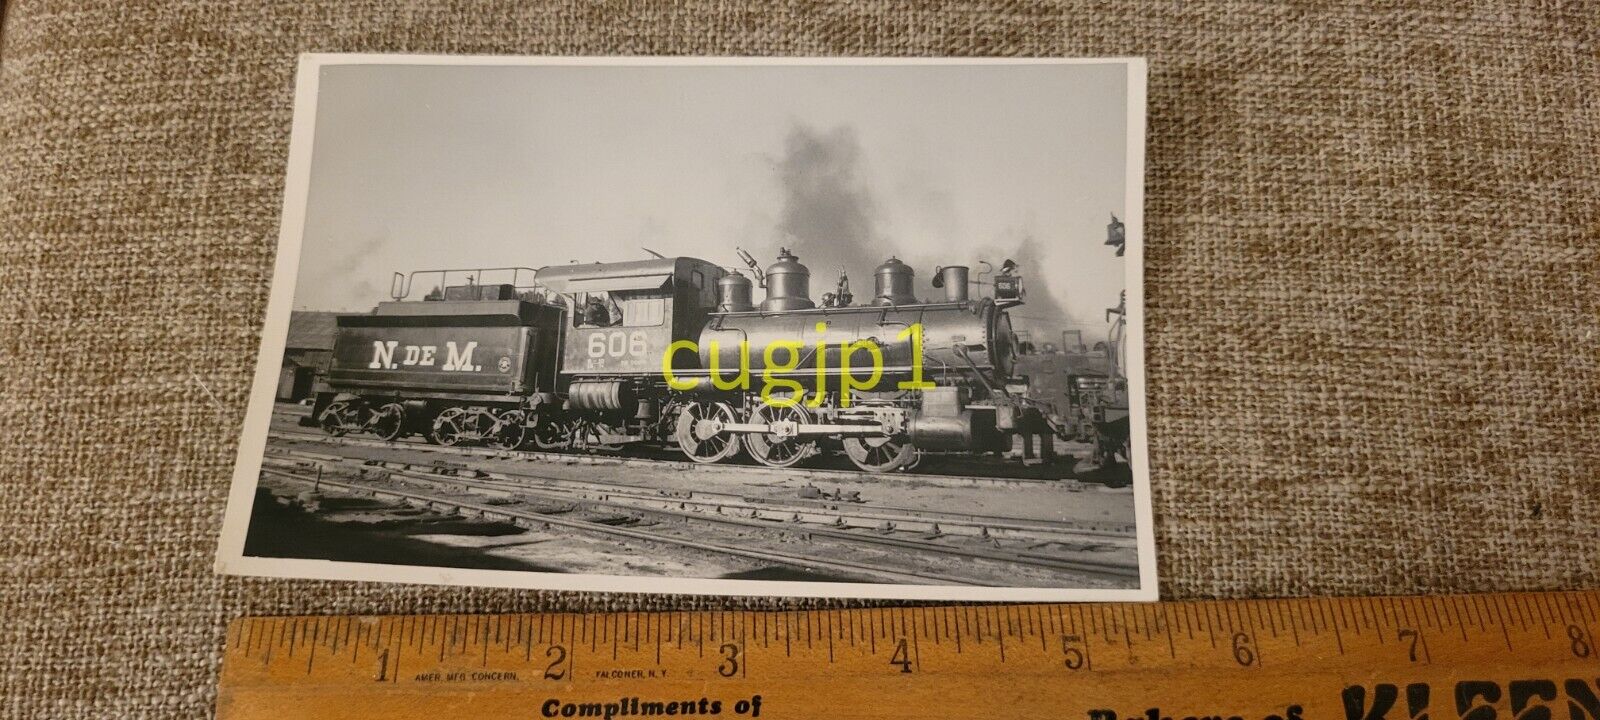 R197 Train Photograph Locomotive Engine N DE M 606 GM BEST MONTEREY 5-1948